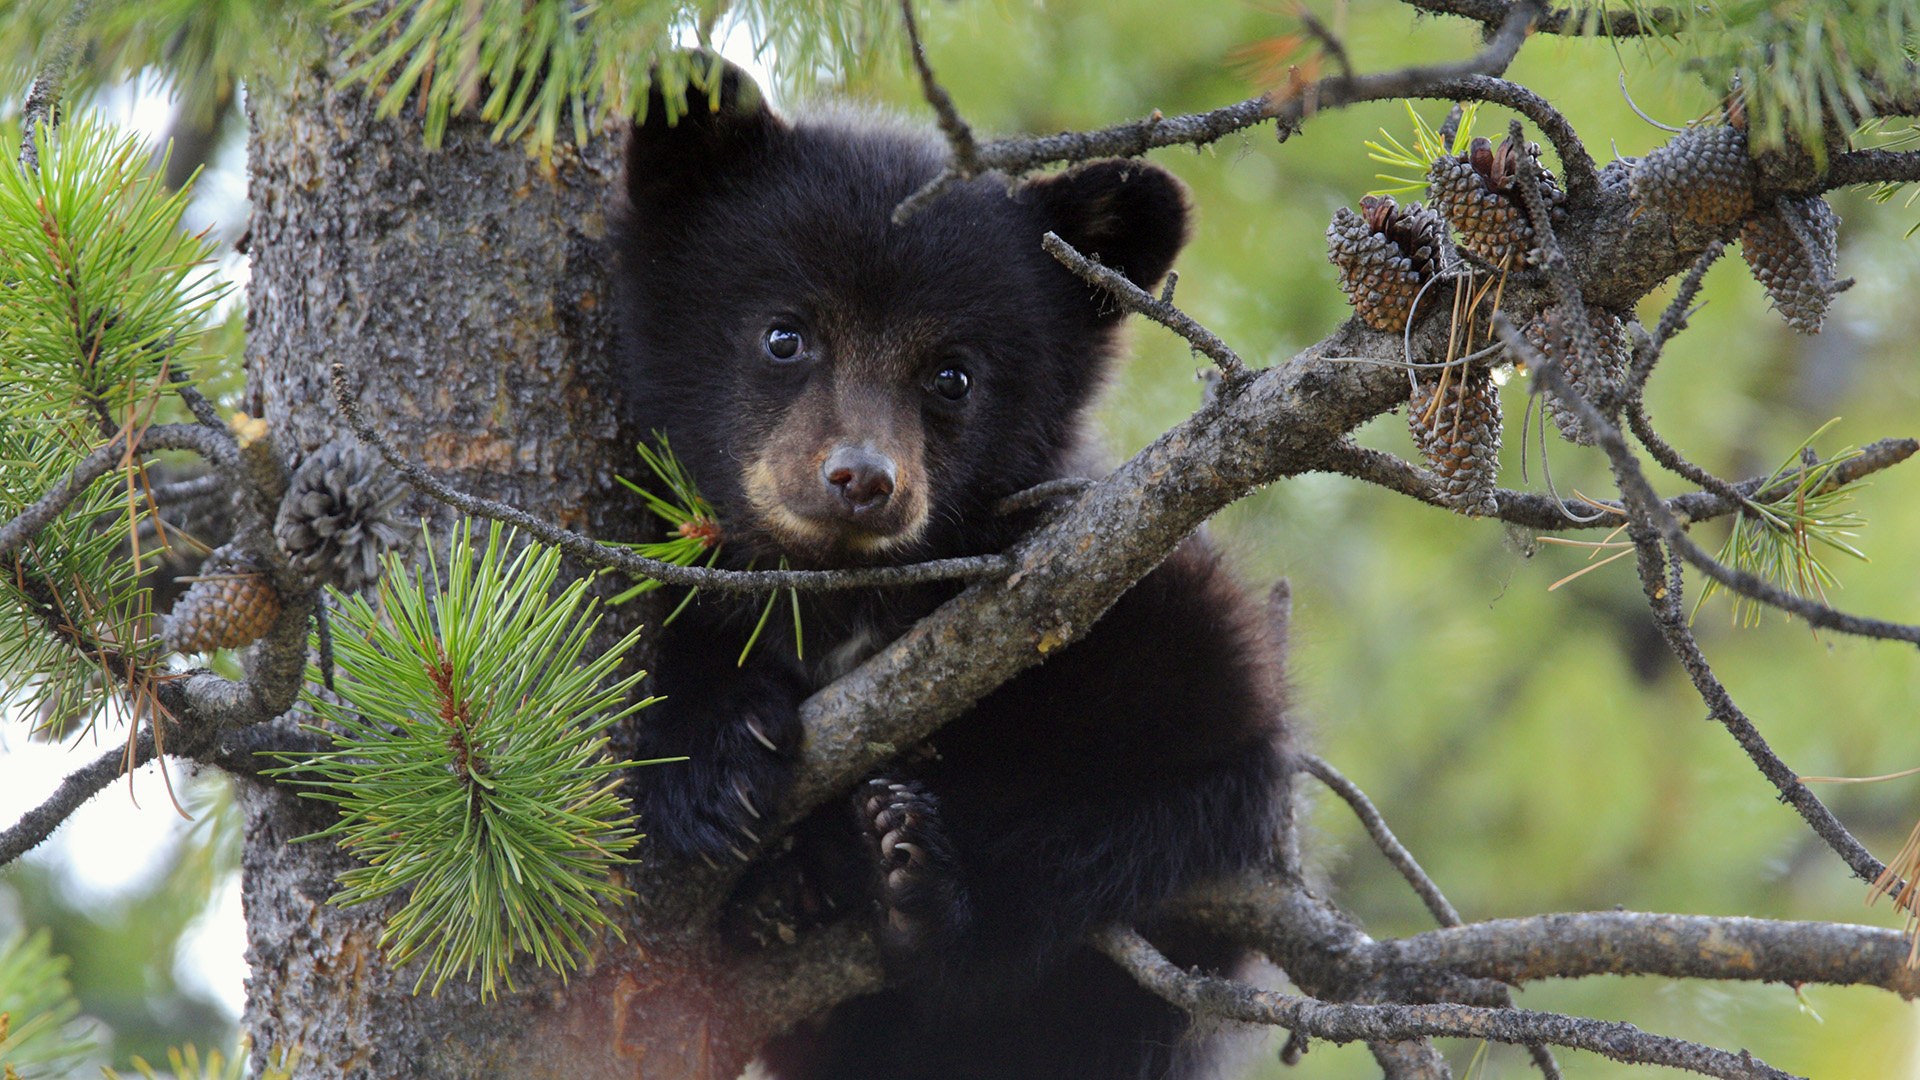 cub, animal, bear, baby animal, pine cone, pine, bears